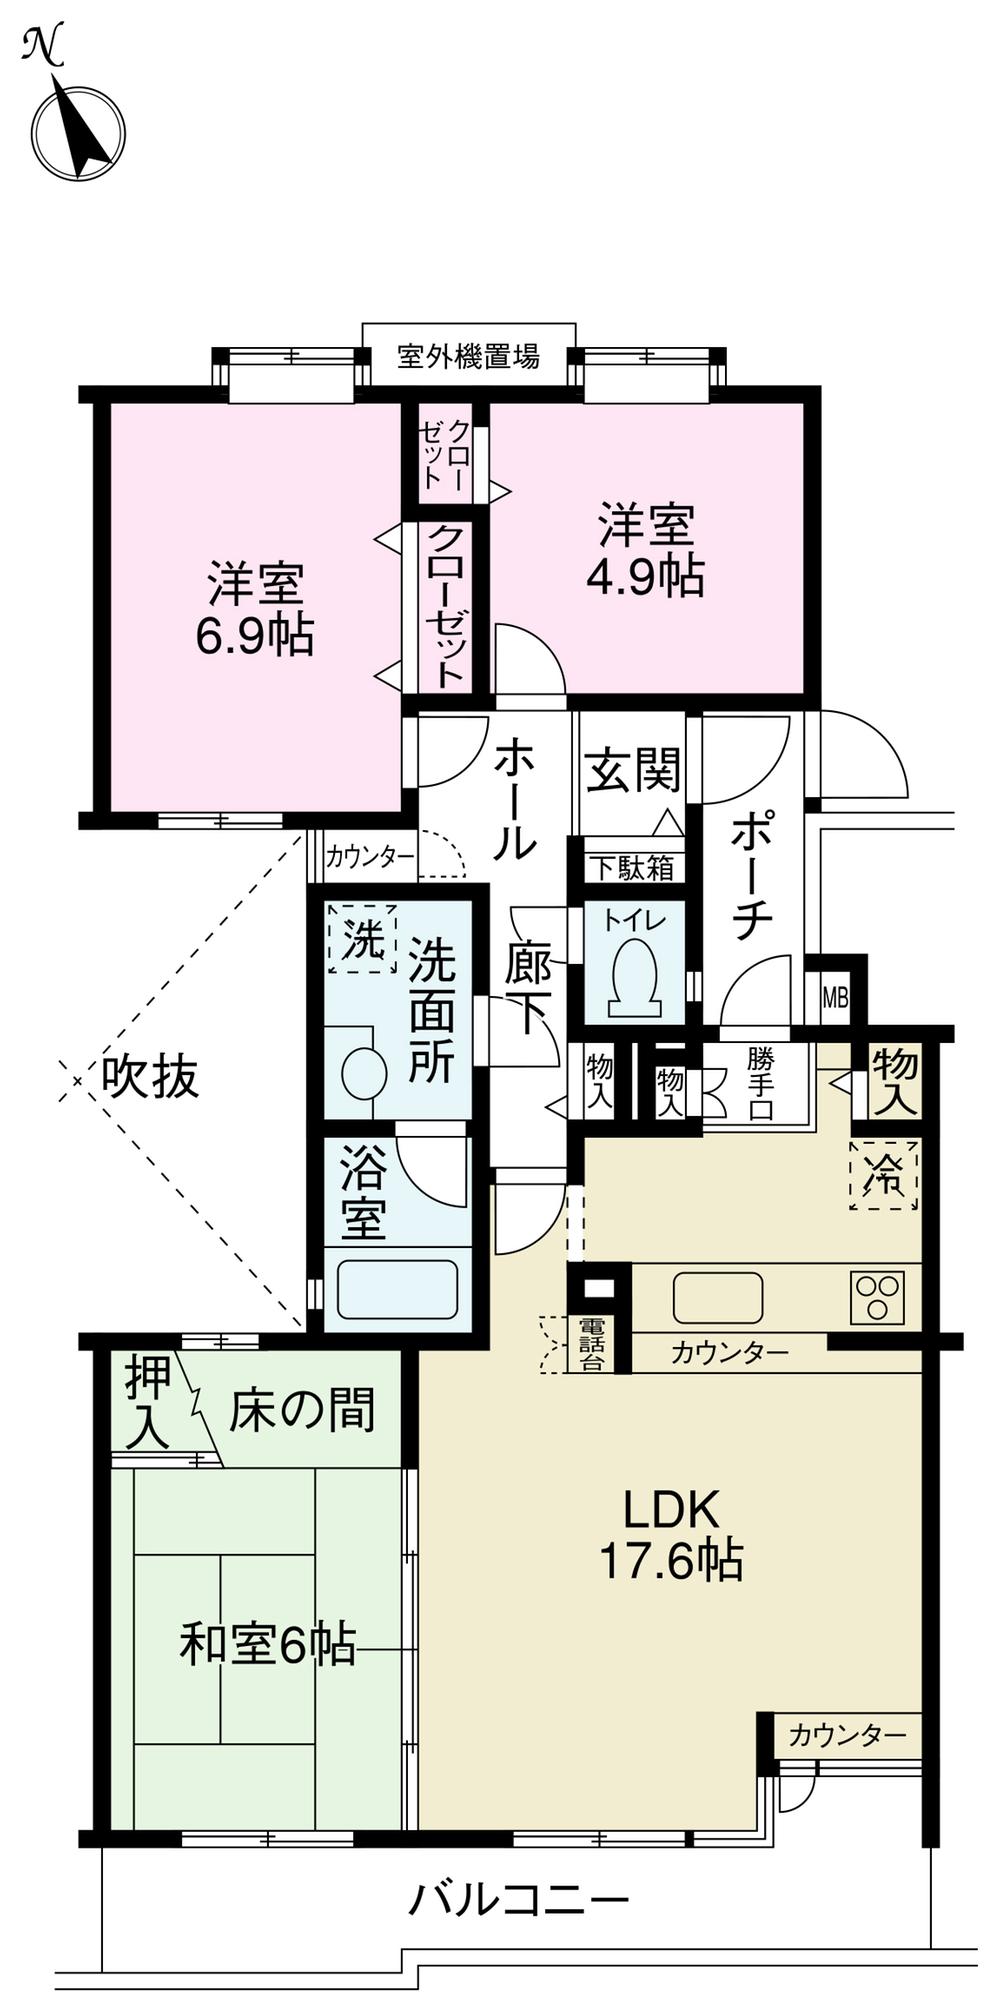 Floor plan. 3LDK, Price 23.8 million yen, Occupied area 82.29 sq m , Balcony area 10.84 sq m